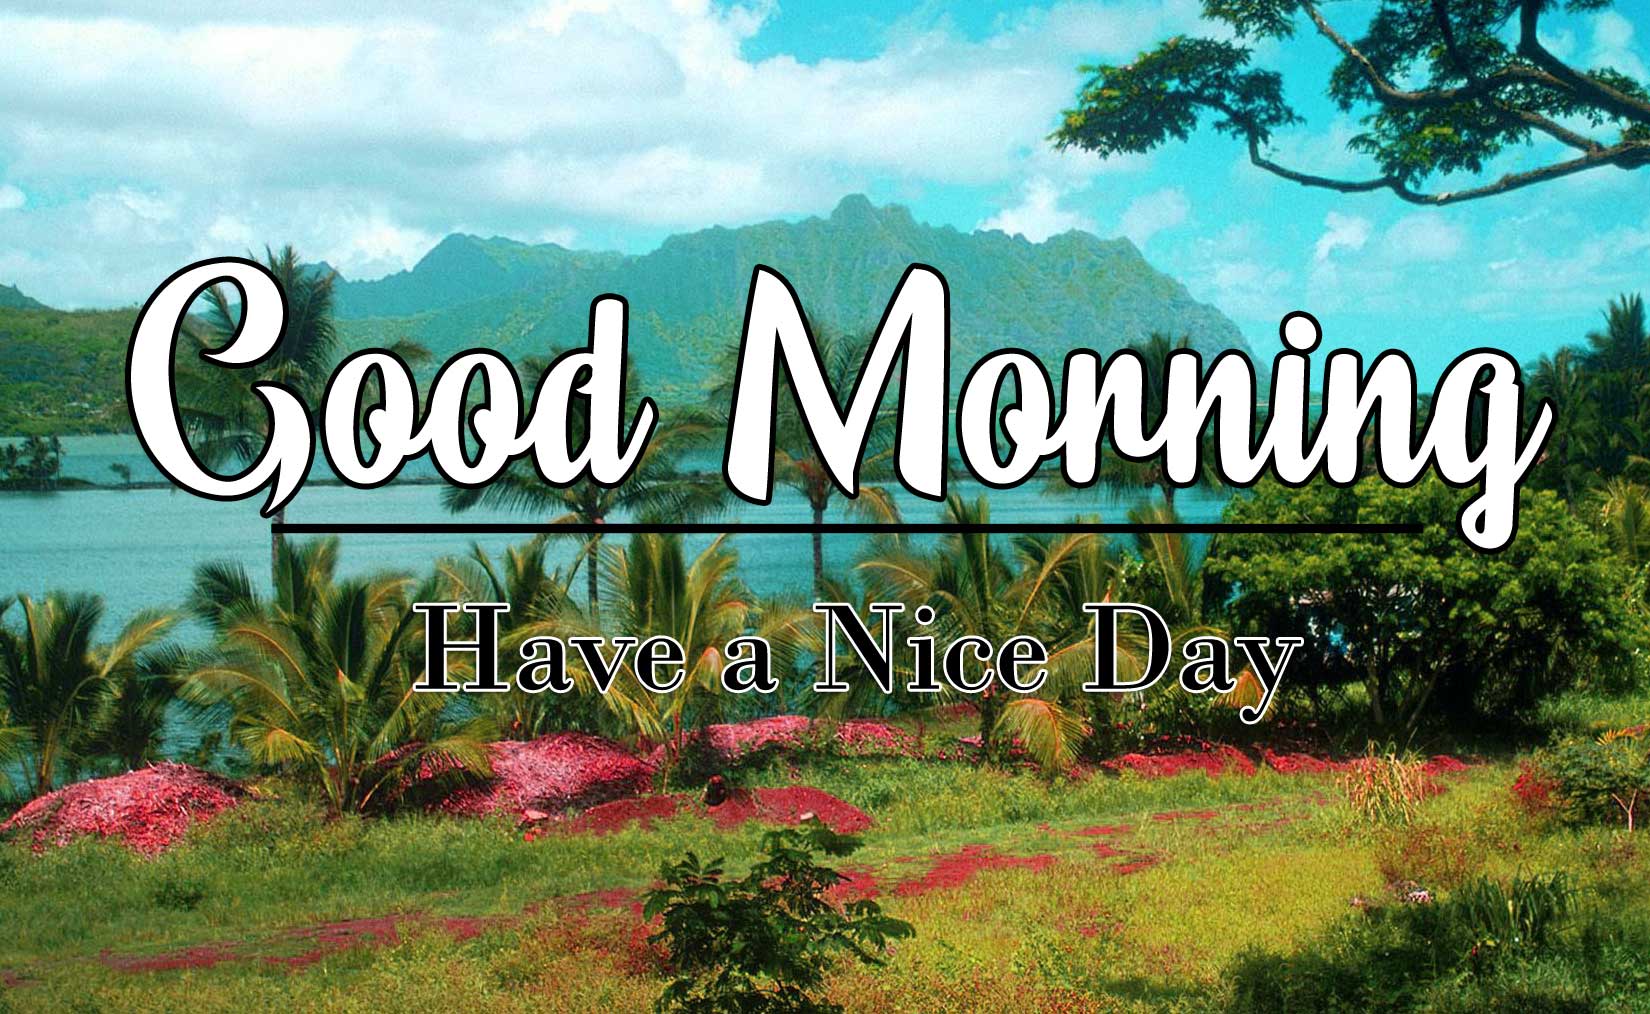 Good Morning Wishes Wallpaper Pics Wallpaper Free Download